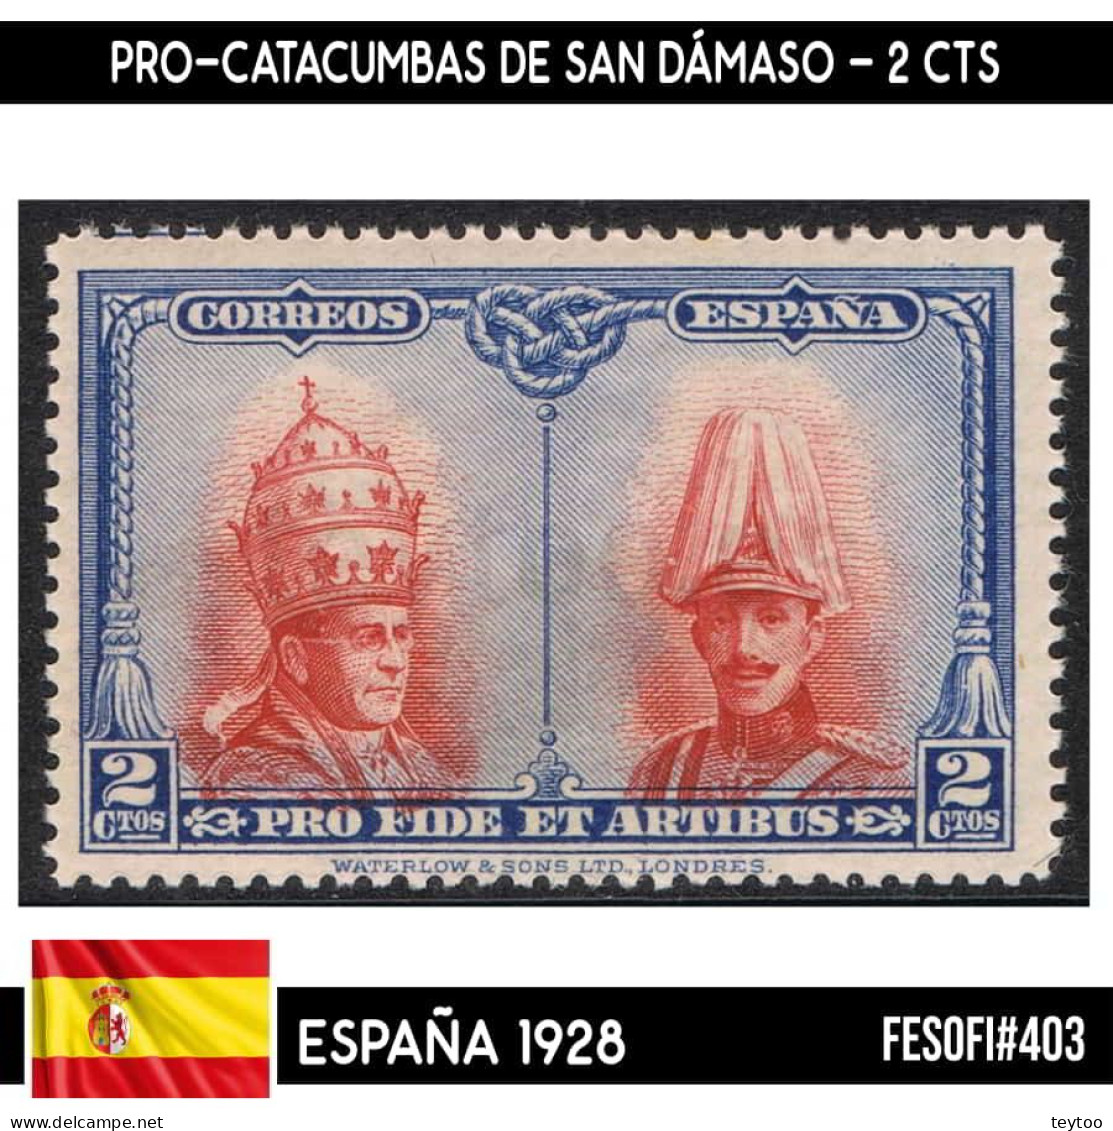 B0544.2# España 1928. Pro-Catacumbas San Dámaso, 2 Cts (MNH) FES#403 - Nuevos